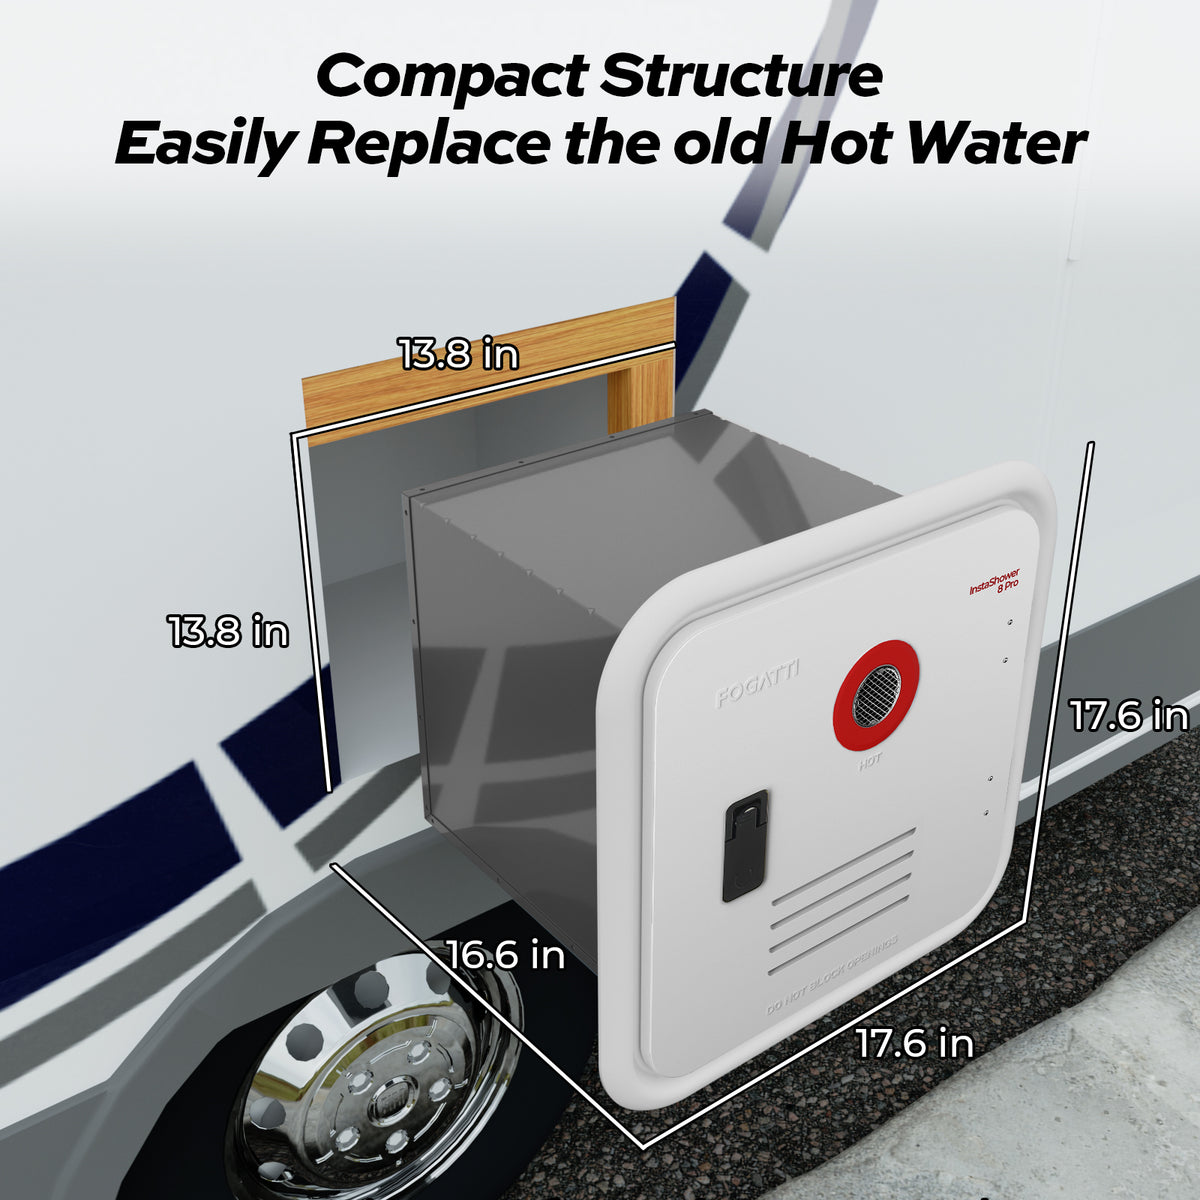 Instashower 8 Pro Tankless Water Heater